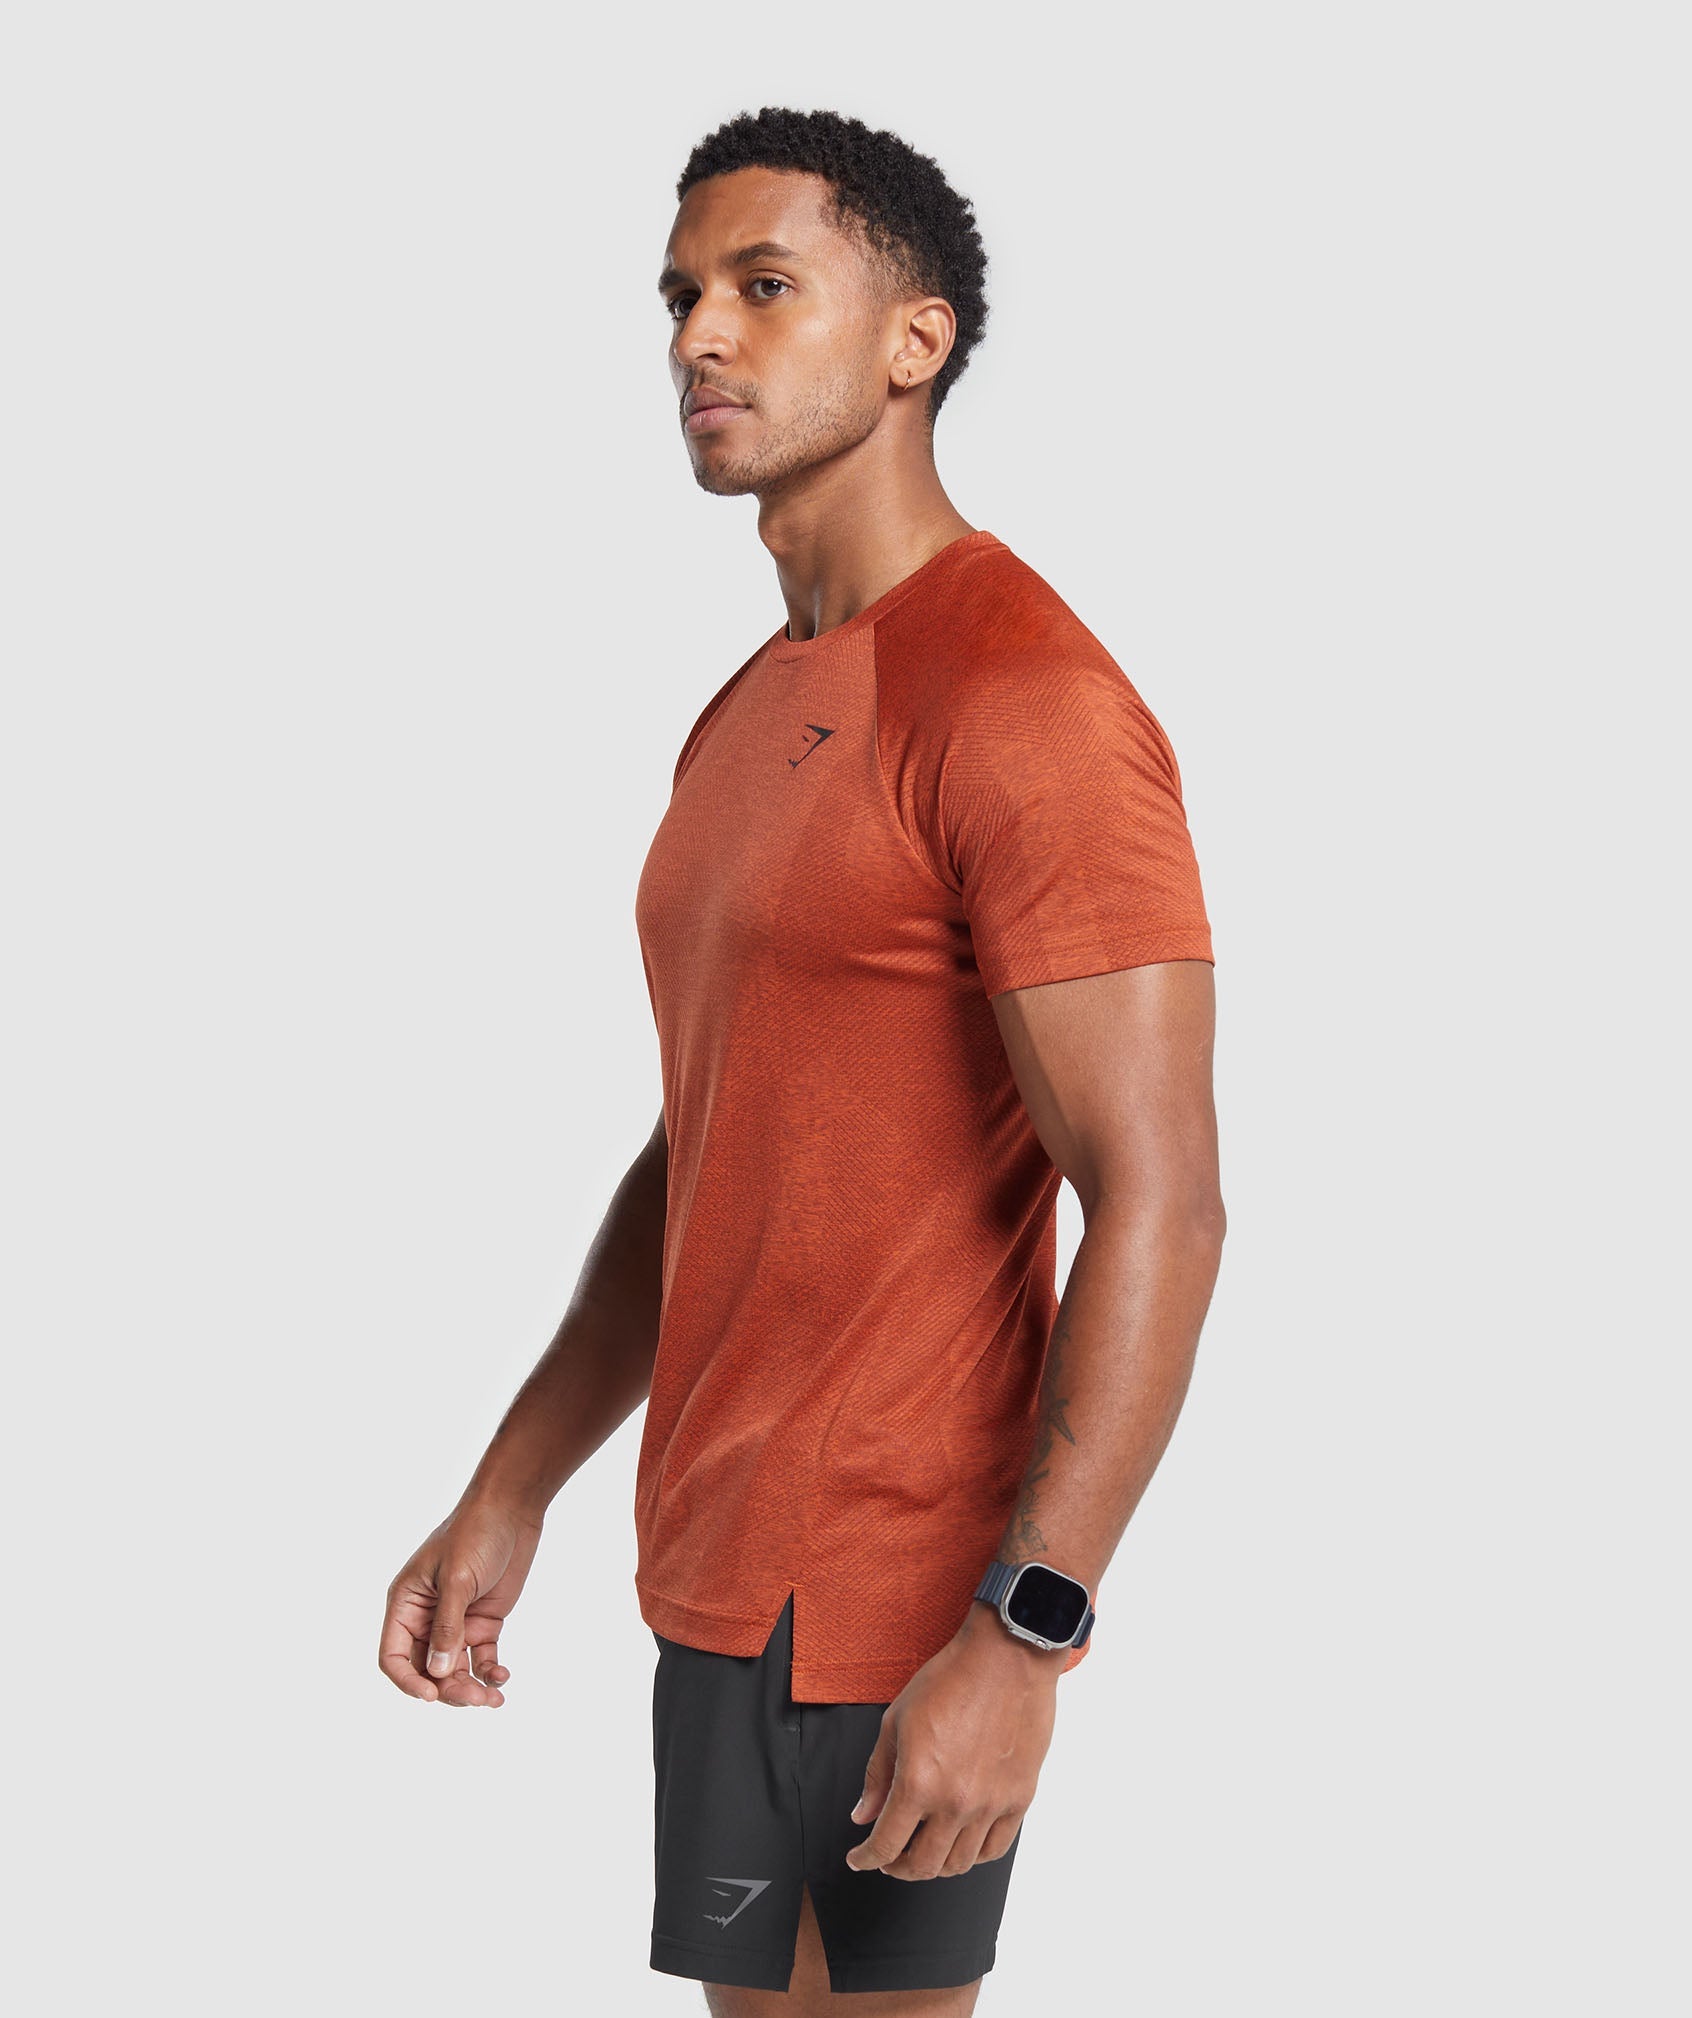 Apex T-Shirt in Rust Orange/Rust Brown - view 3